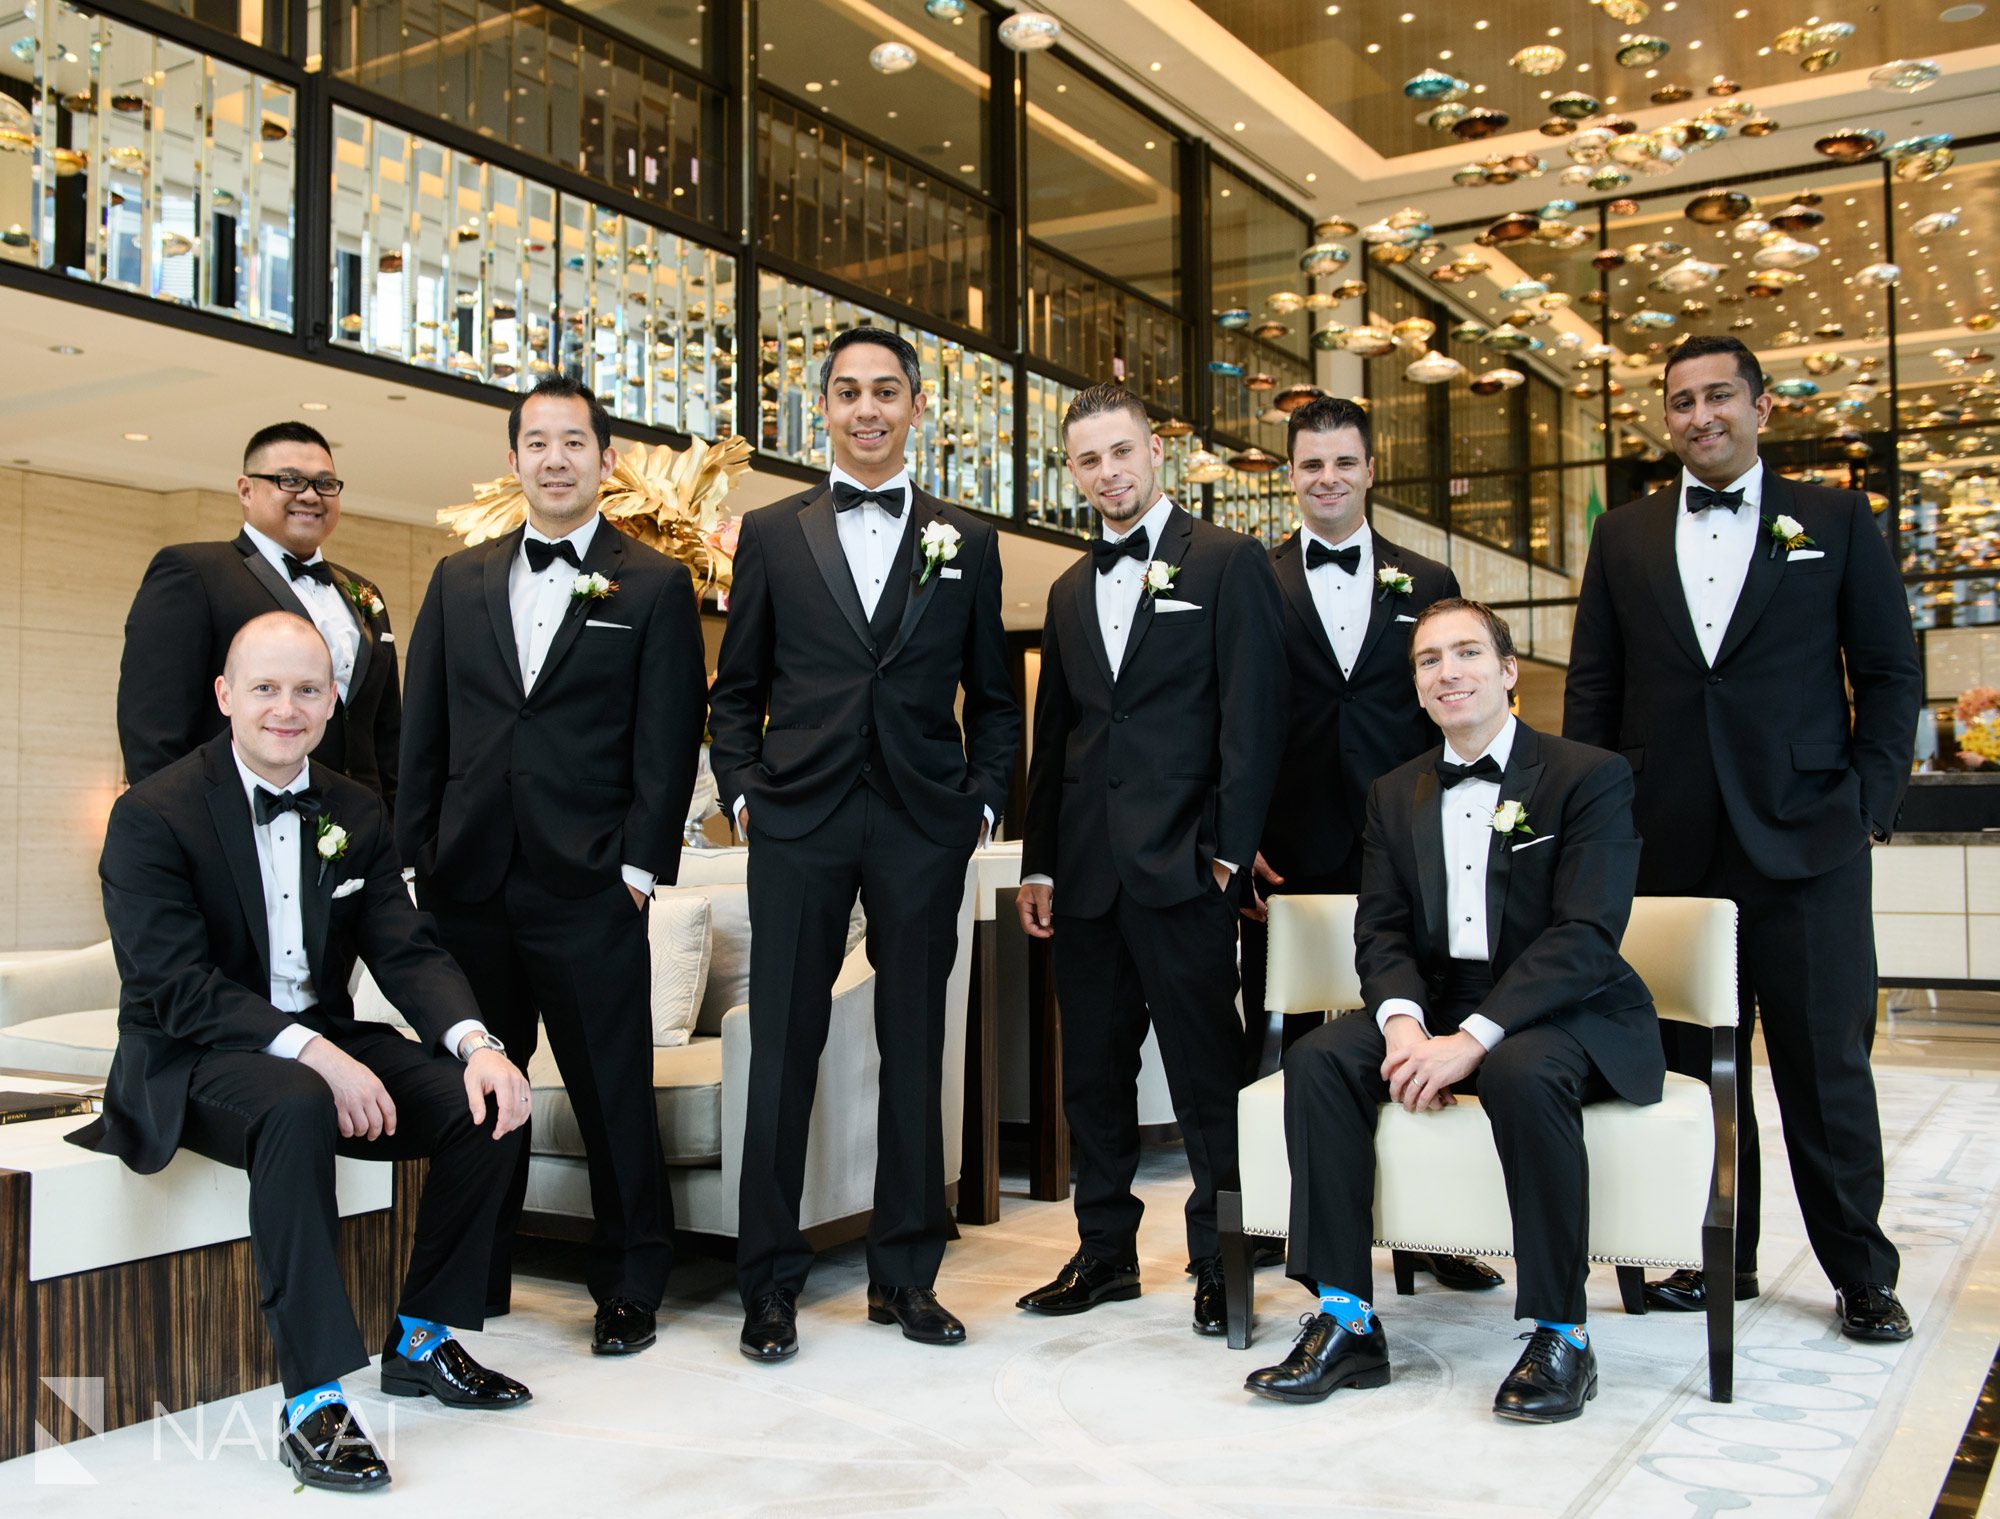 langham Chicago wedding photos luxury groomsmen